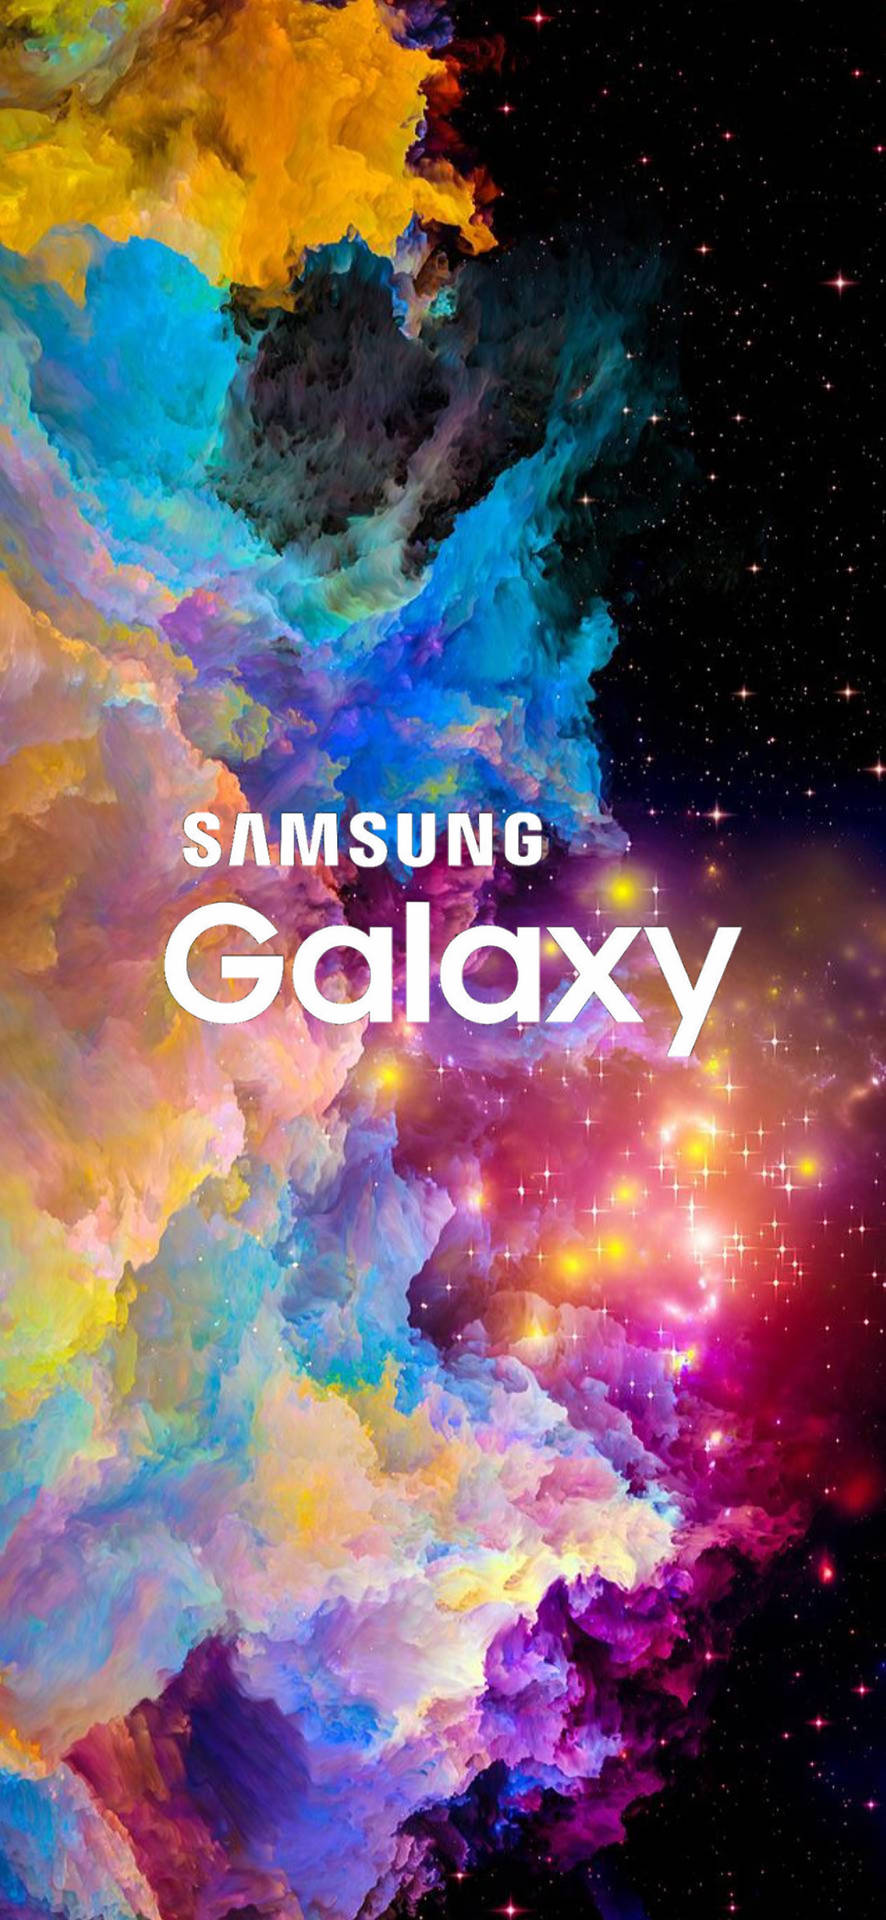 Samsung Galaxy Farverig Nebula Wallpaper